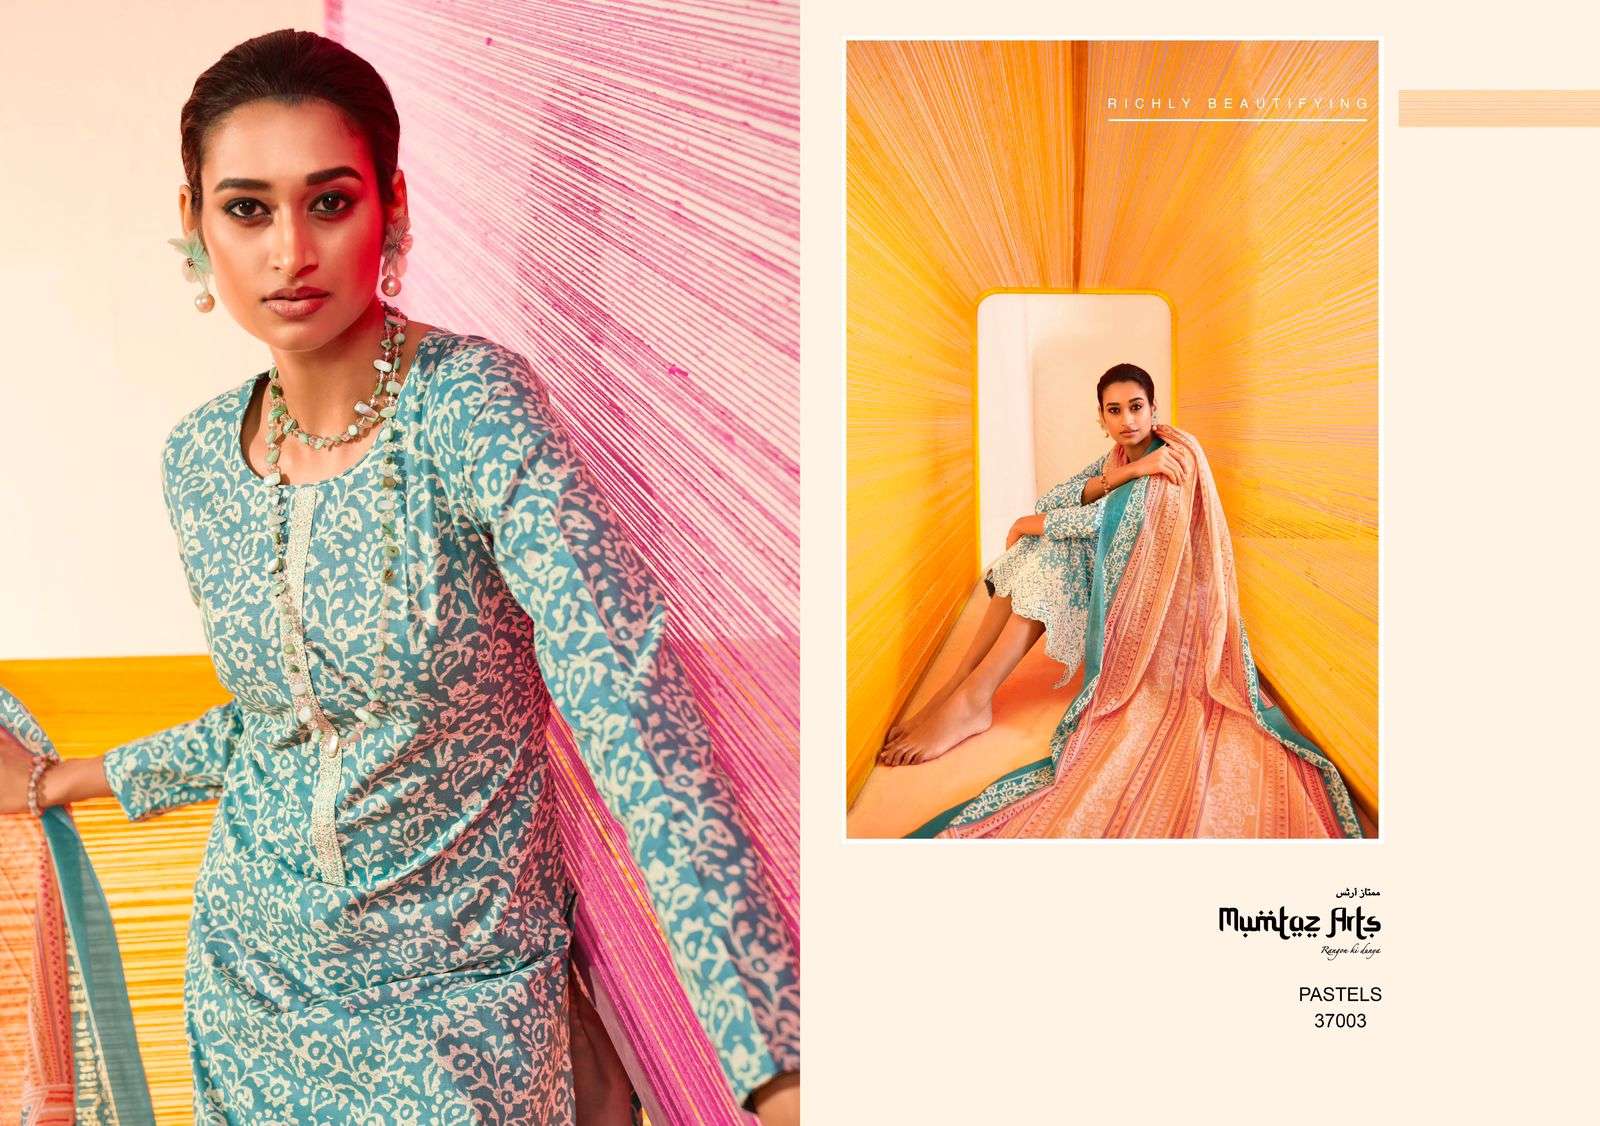 mumtaz arts pastels 37001-37008 series trendy designer salwar kameez catalogue online dealer surat